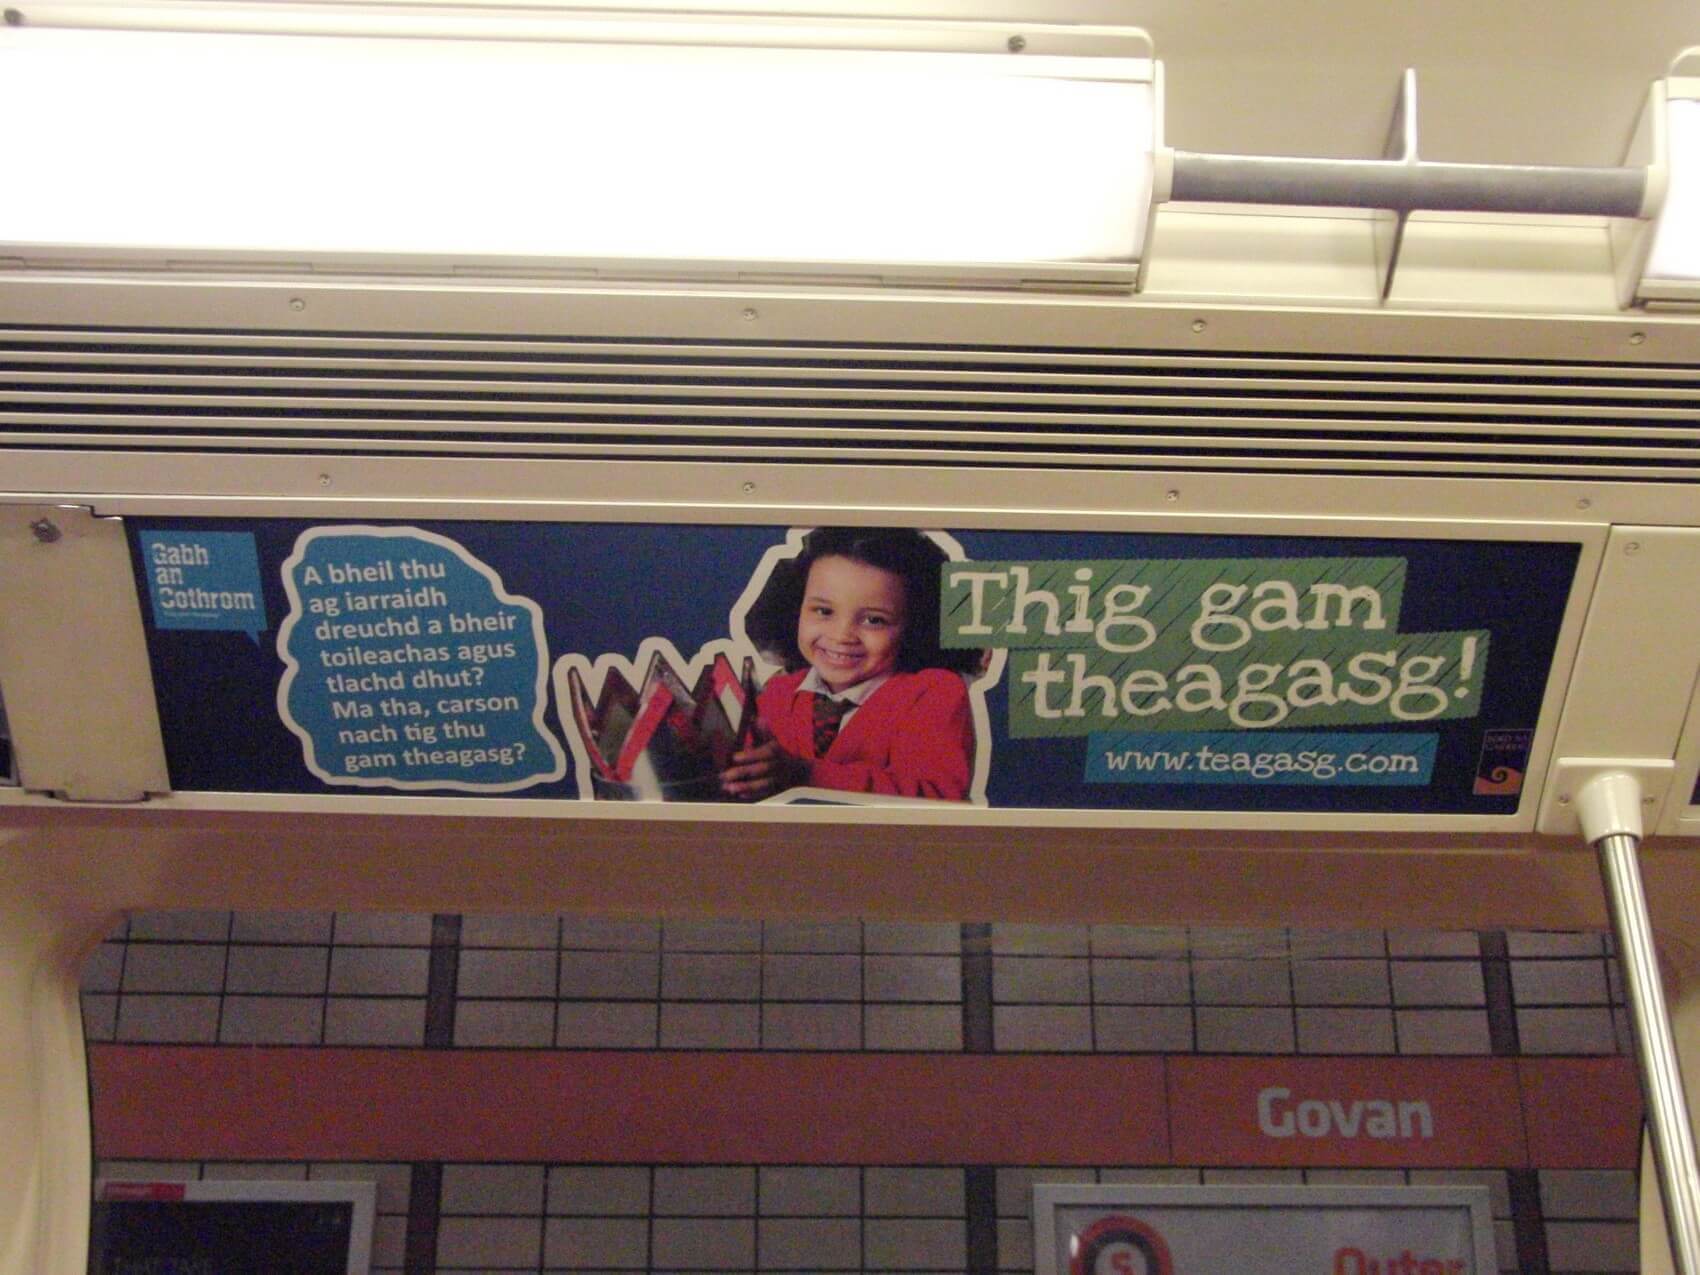 The Gaelic Subway Ad's in Glasgow